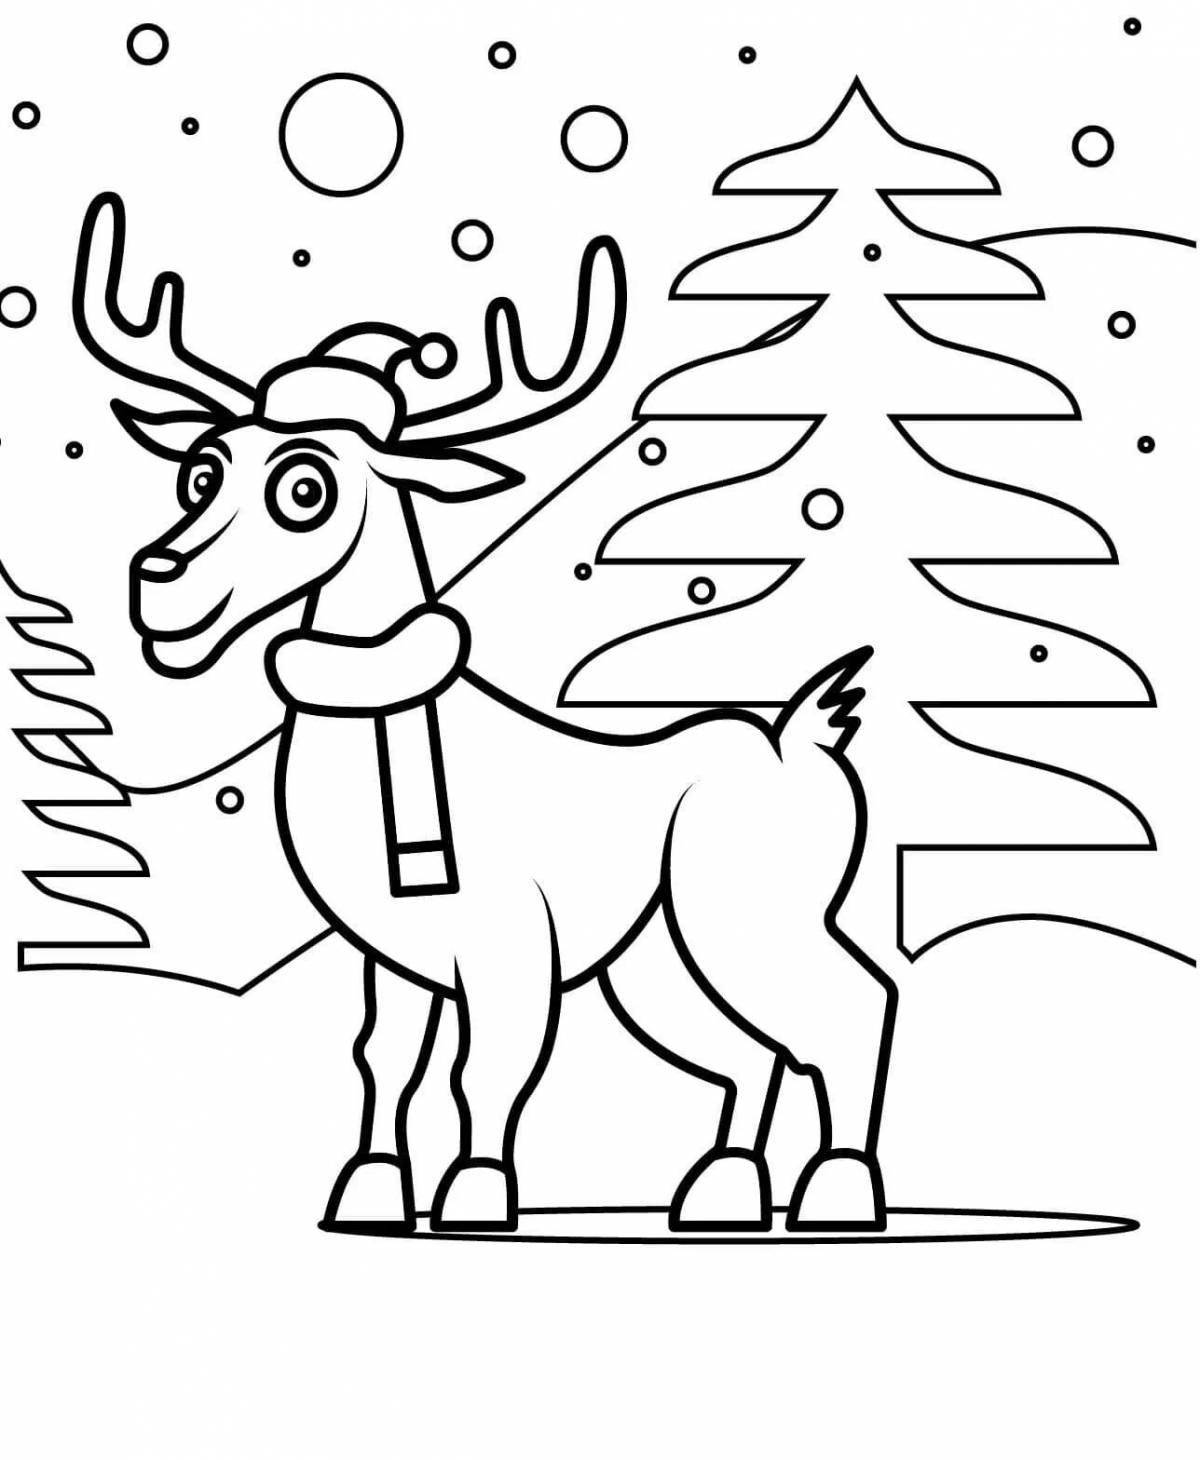 Coloring page happy deer